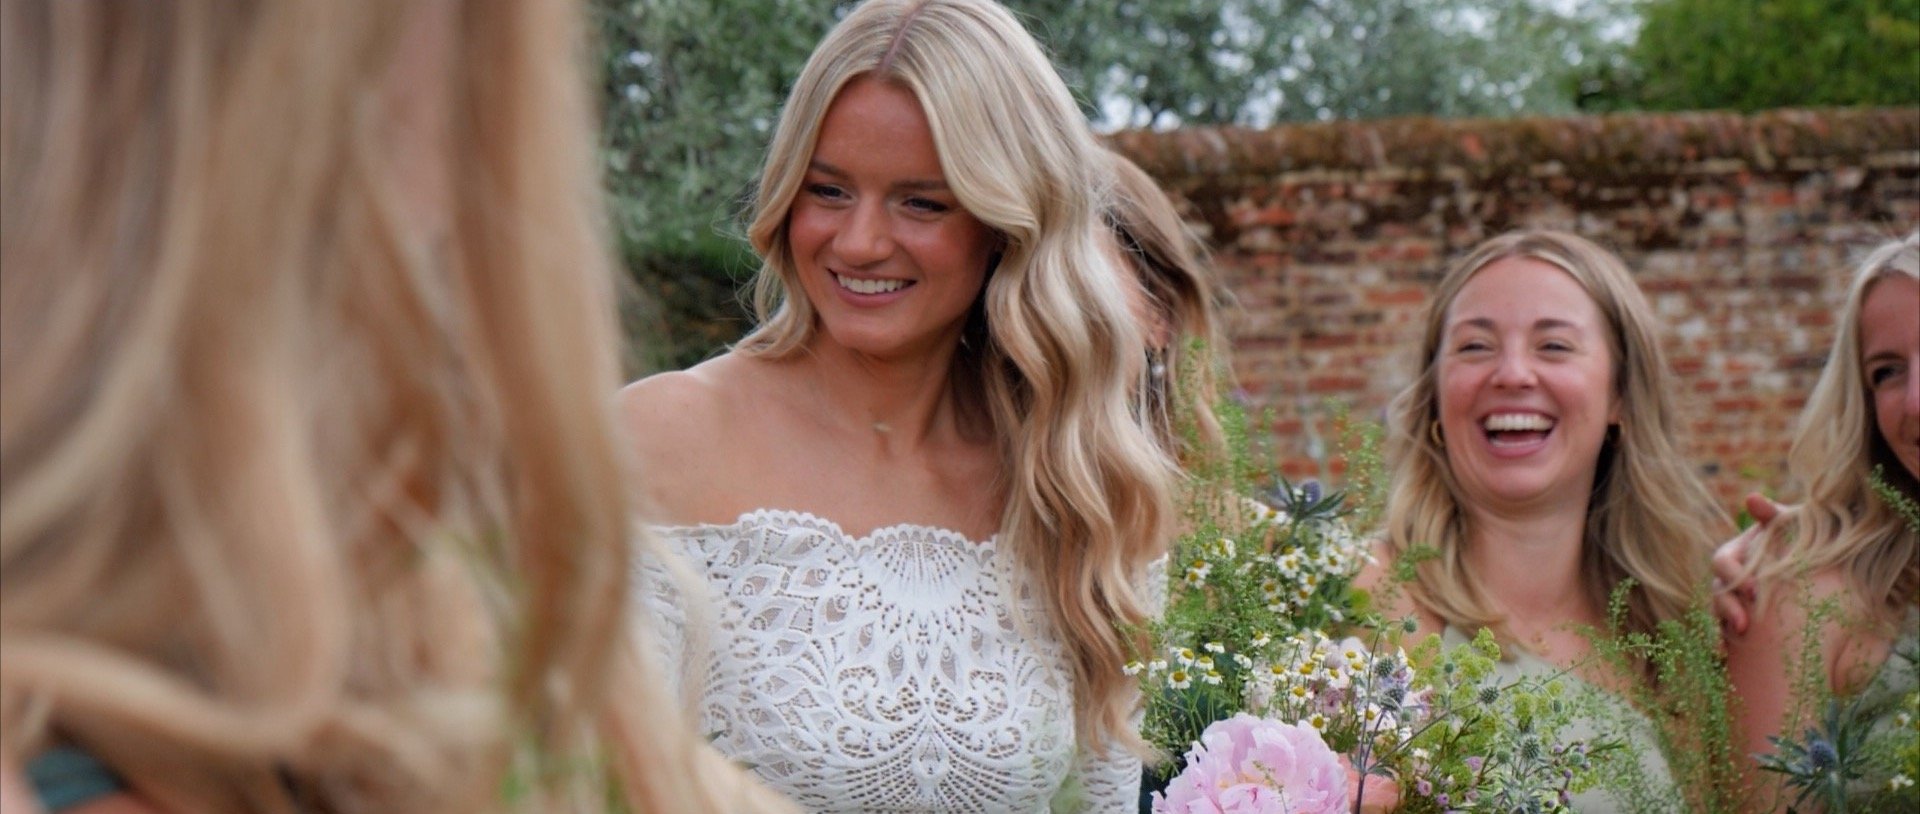 Stunning bride - Lauren at Great Lodge - Essex - 3 Cheers Media.jpg